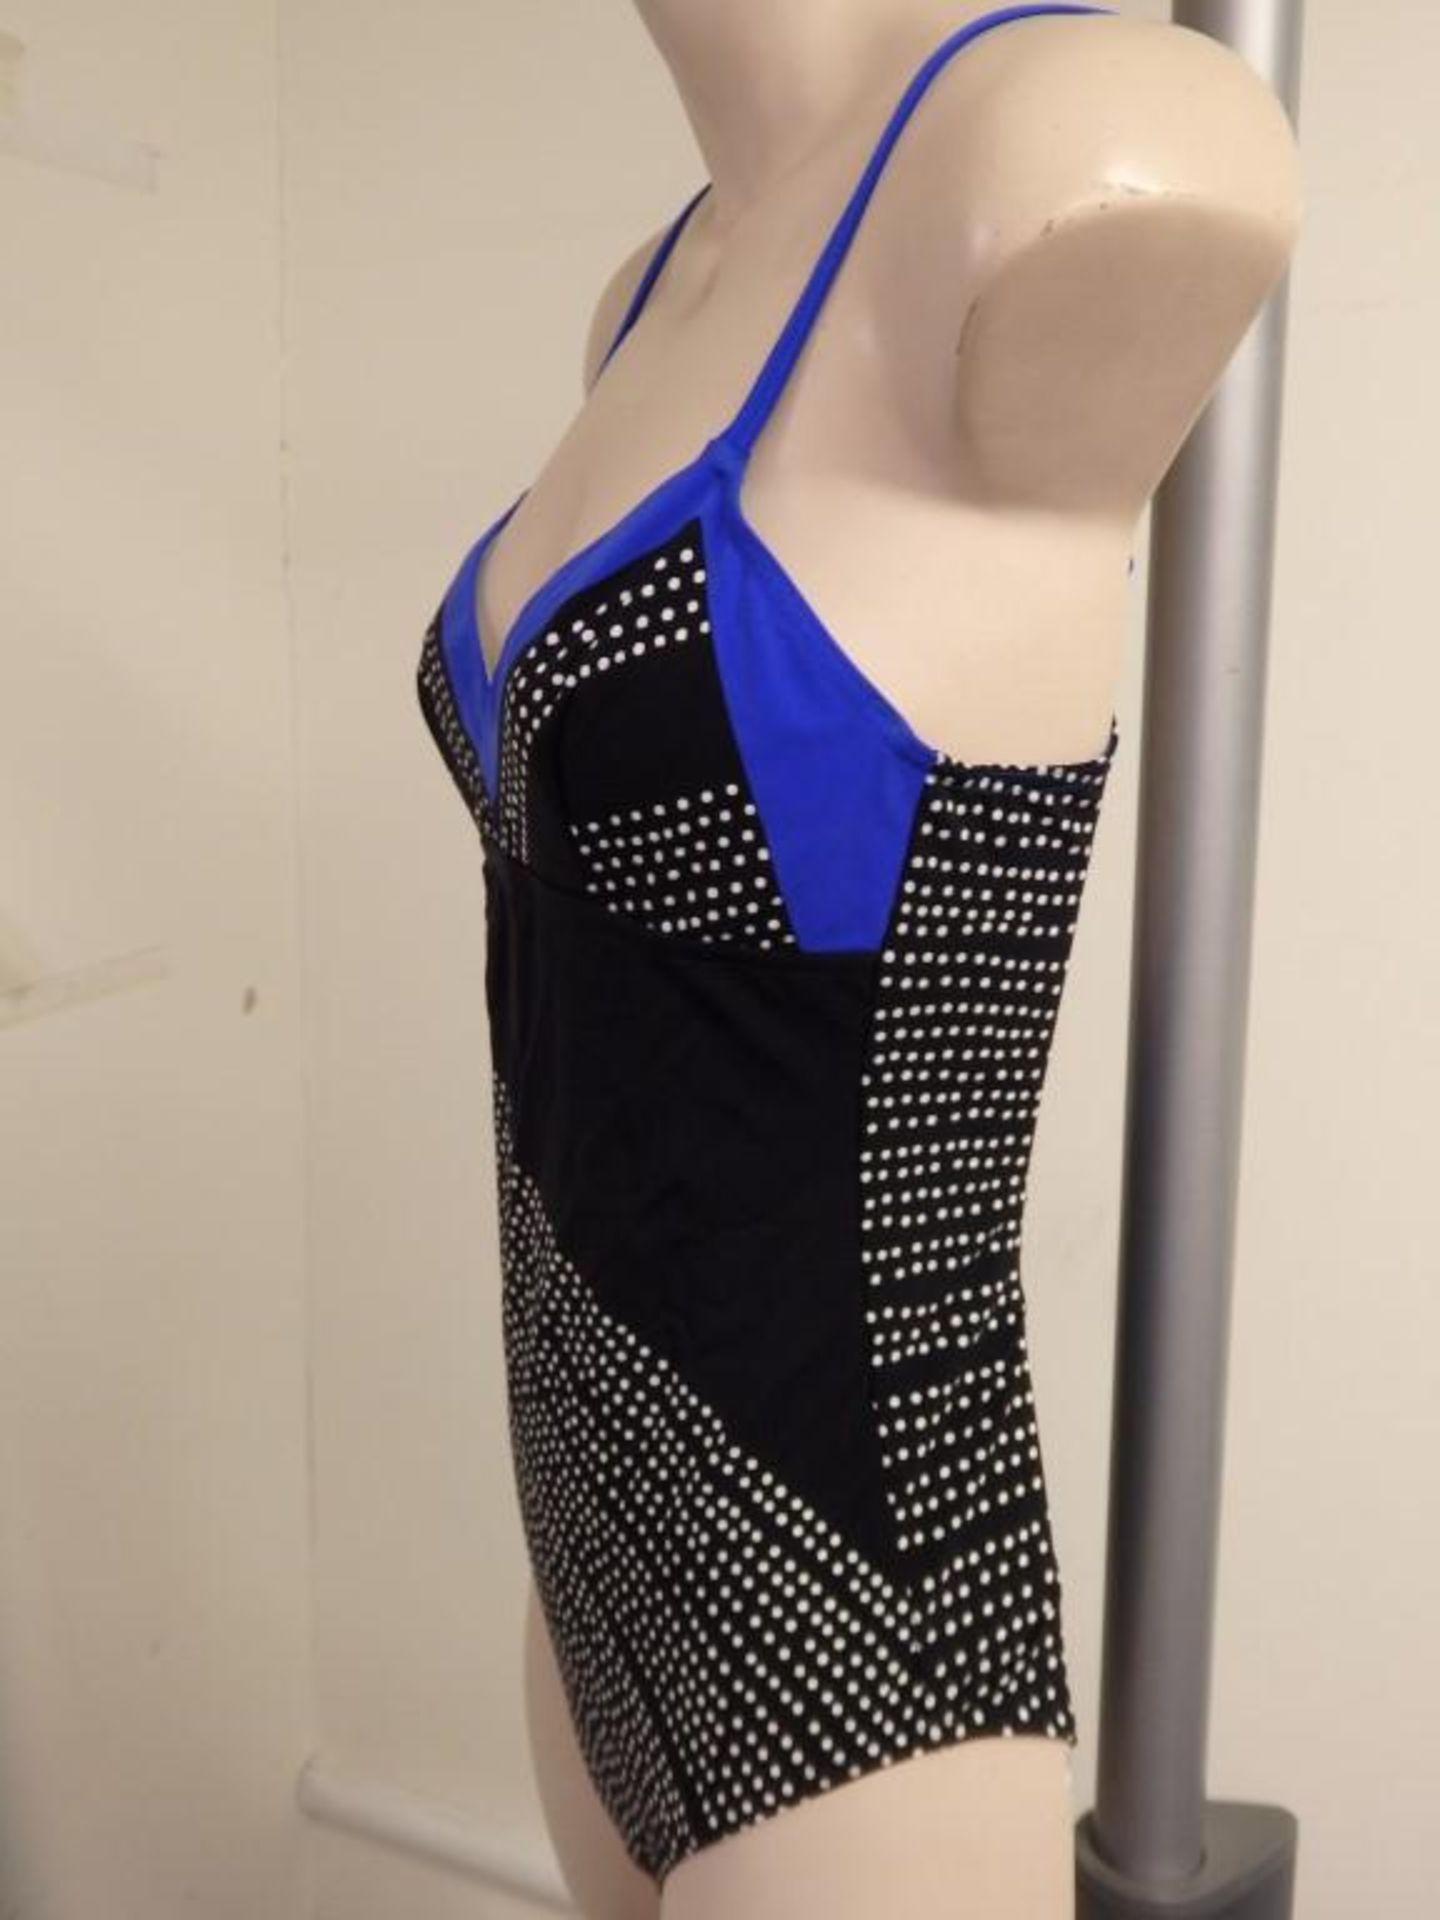 1 x Rasurel - Black Polka dot with royal blue trim &frill Tobago Swimsuit - B21039 - Size 2C - UK 32 - Image 8 of 8